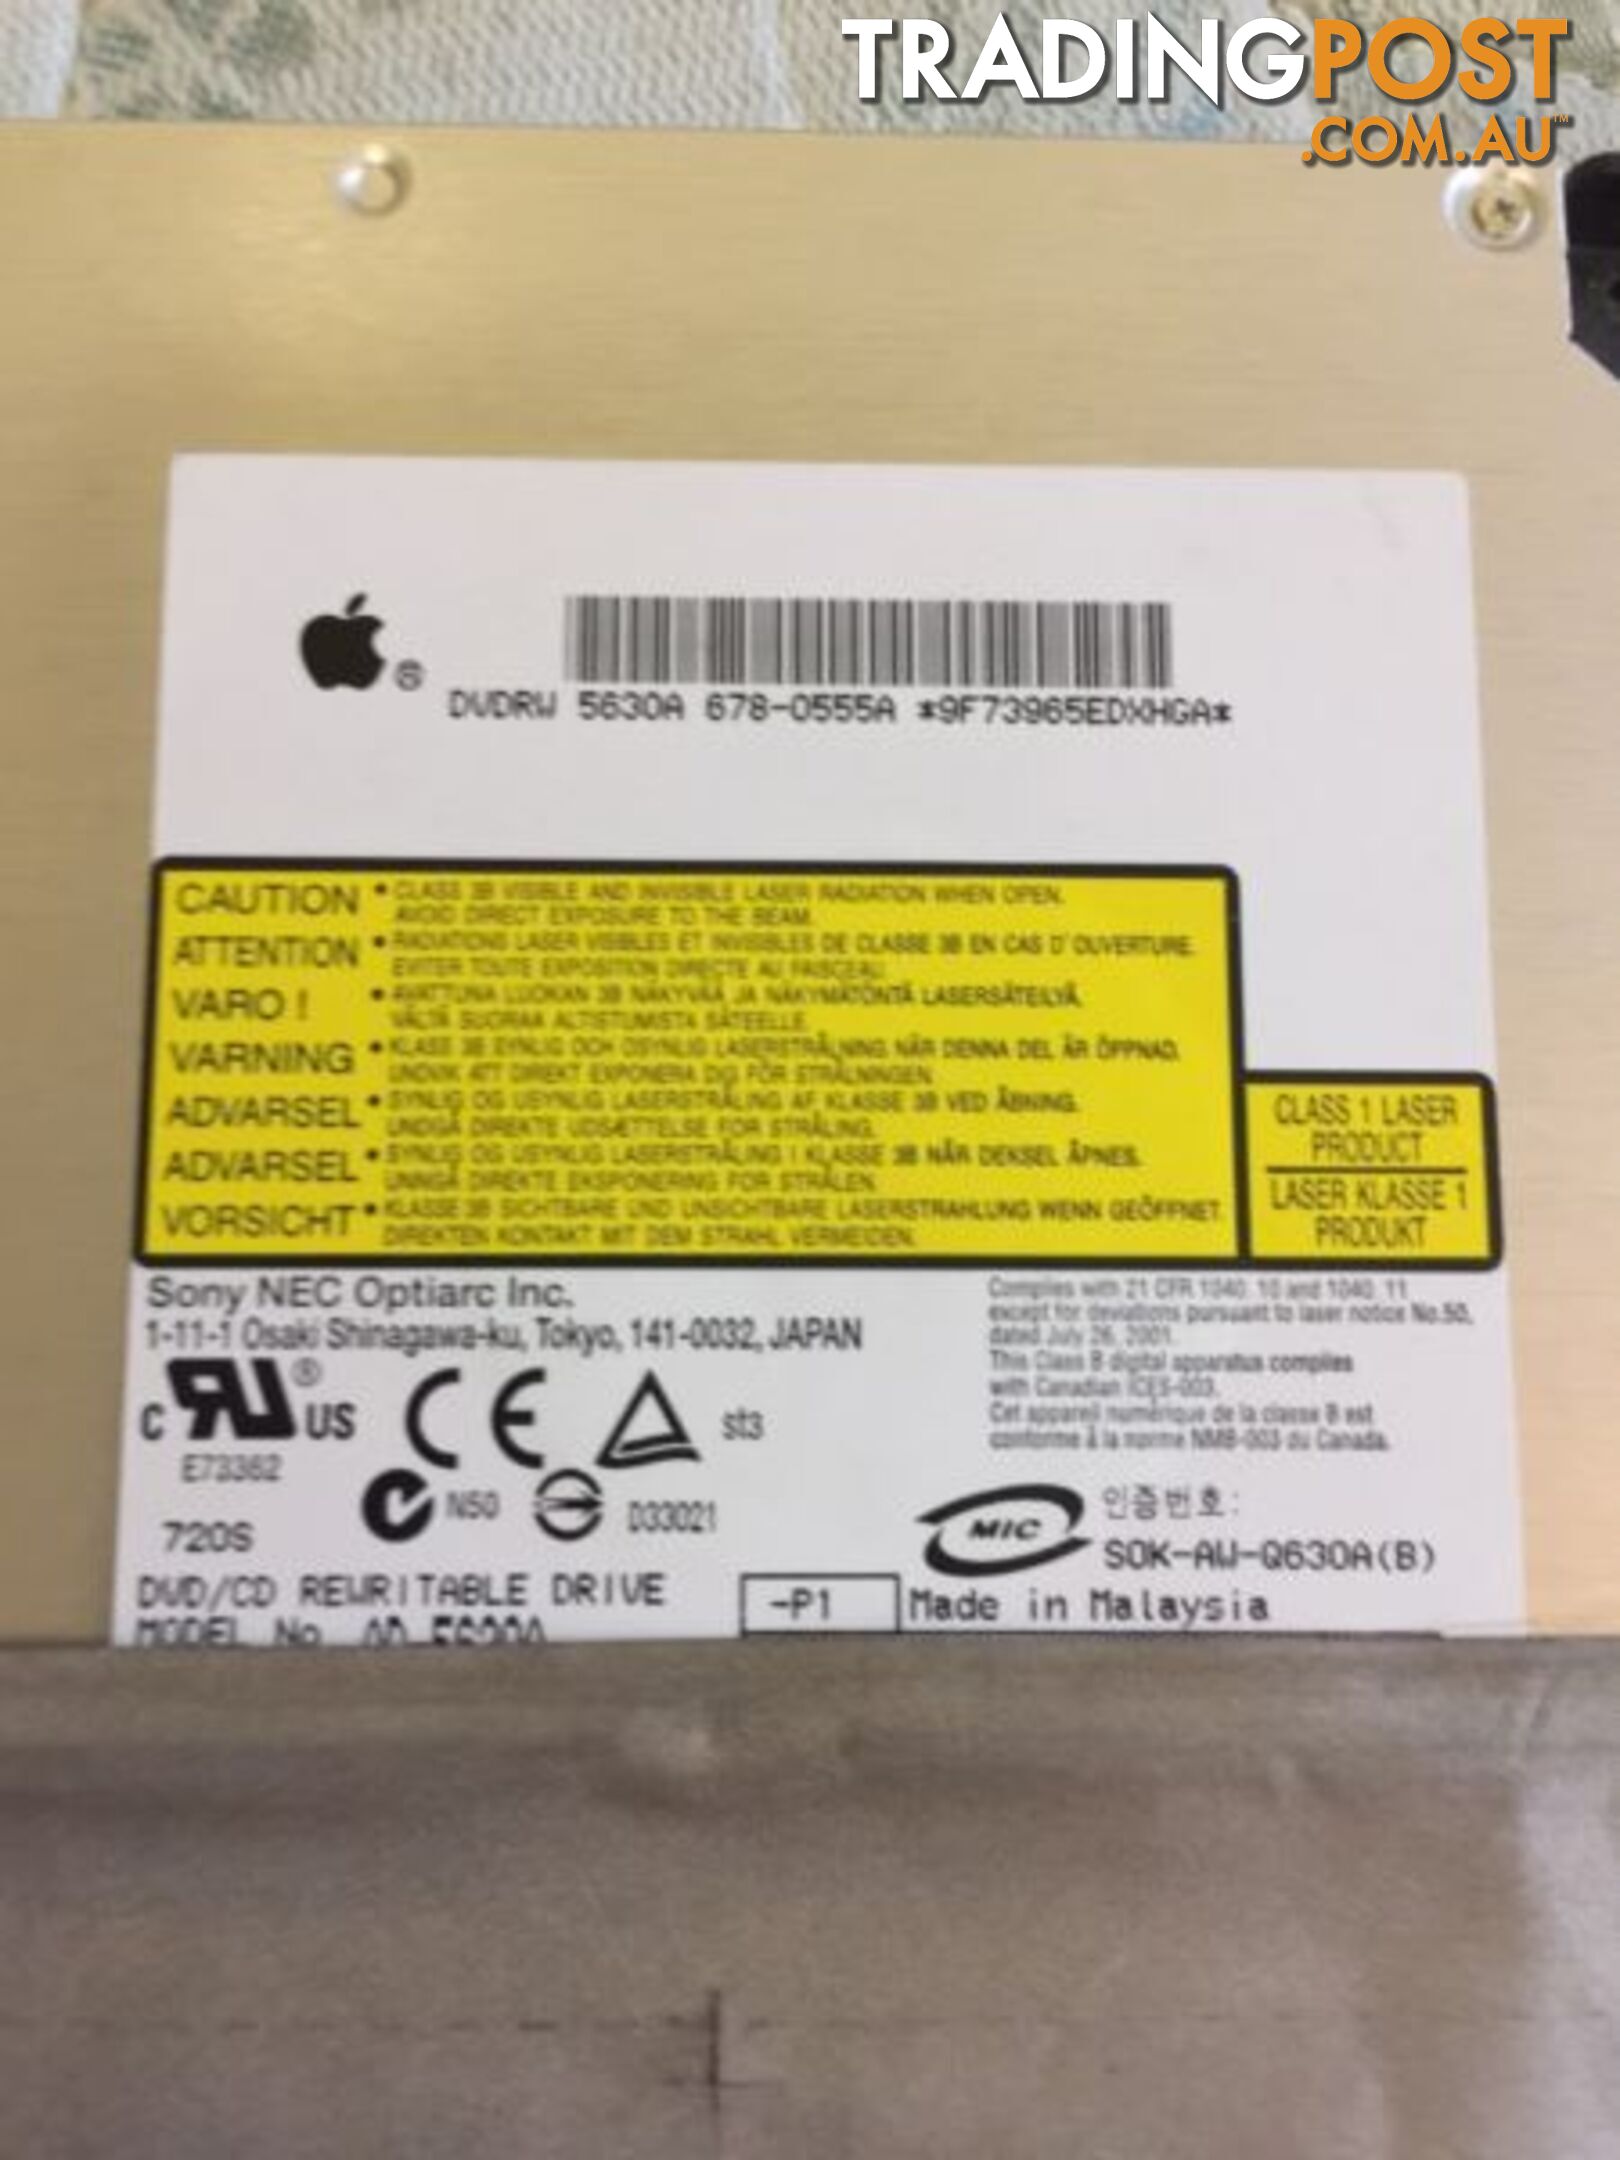 Apple iMac DVD drive